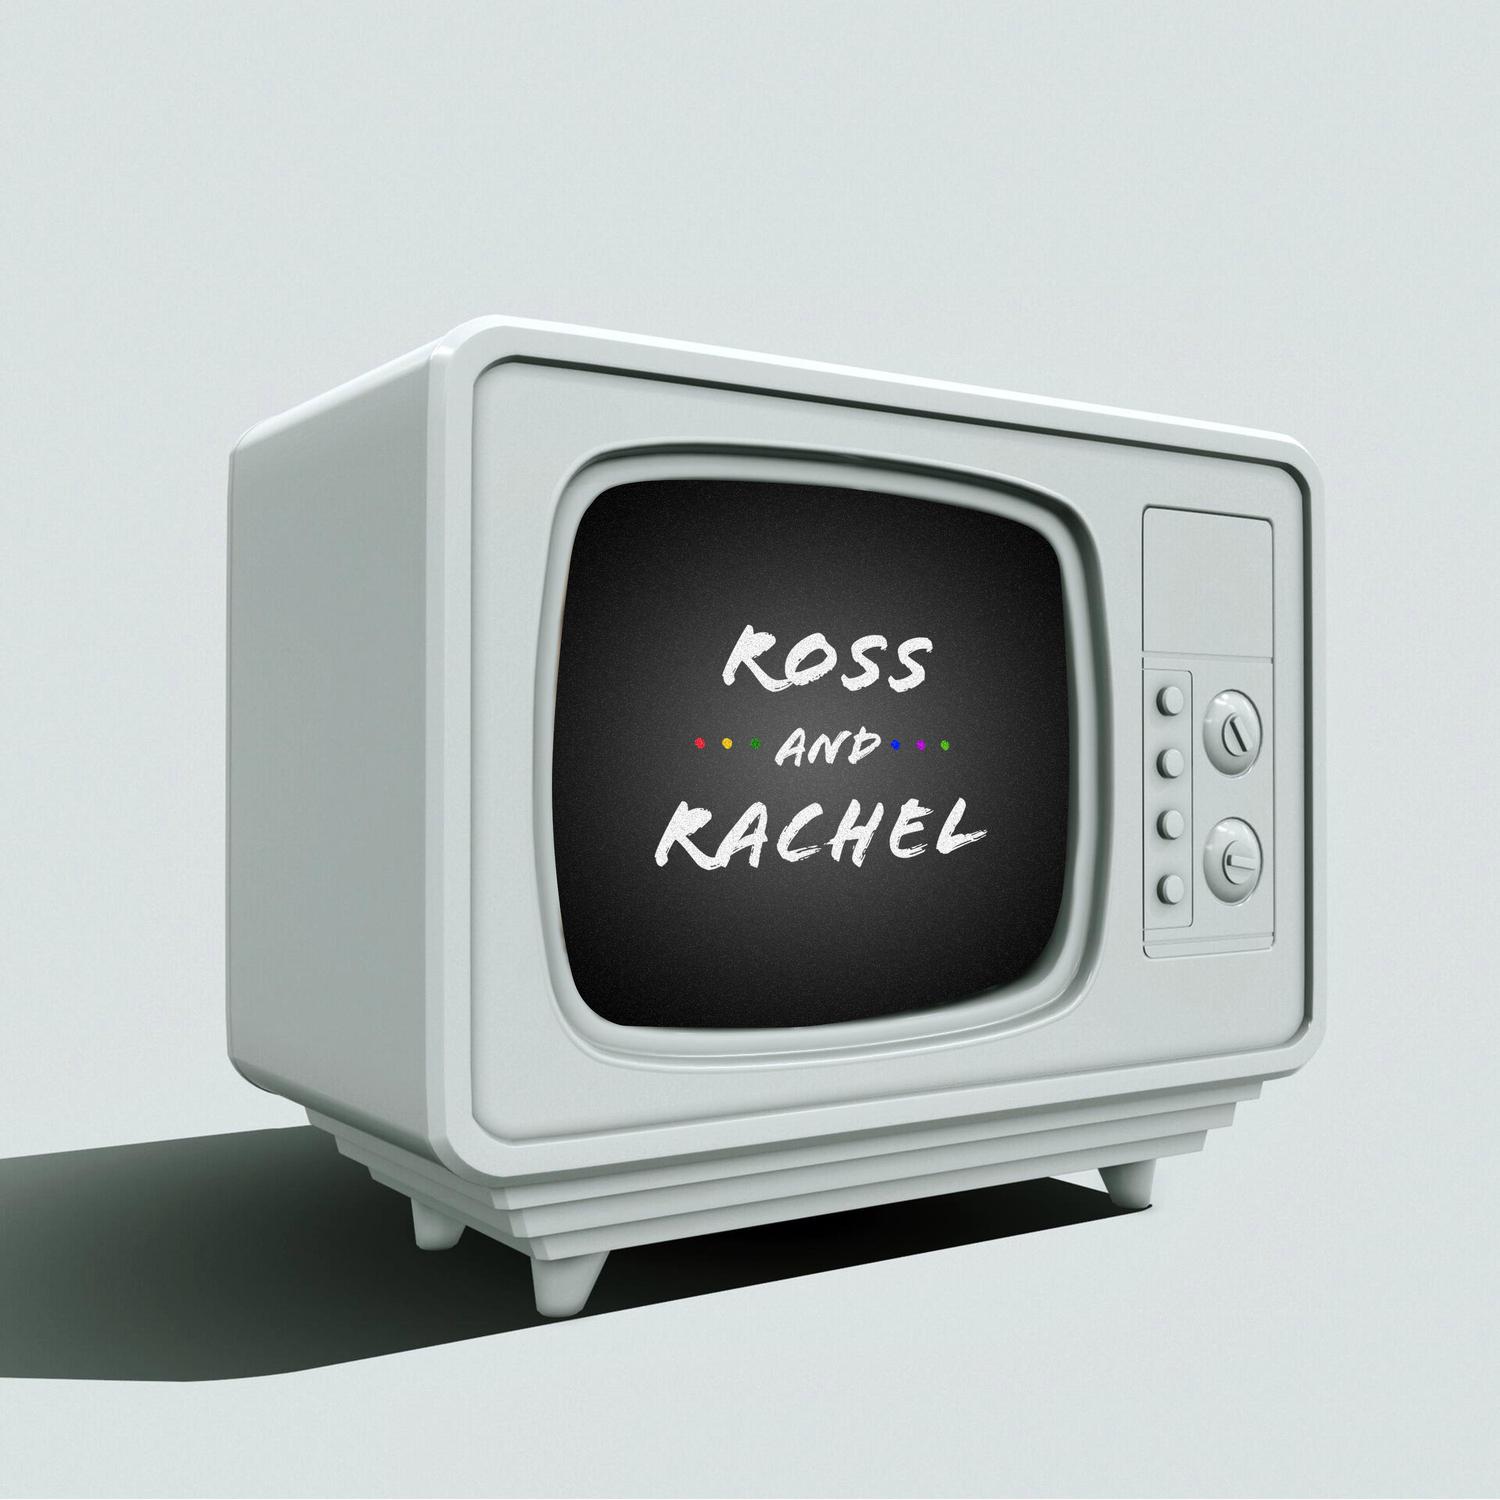 ROSS AND RACHEL歌词 歌手Jake Miller-专辑ROSS AND RACHEL-单曲《ROSS AND RACHEL》LRC歌词下载